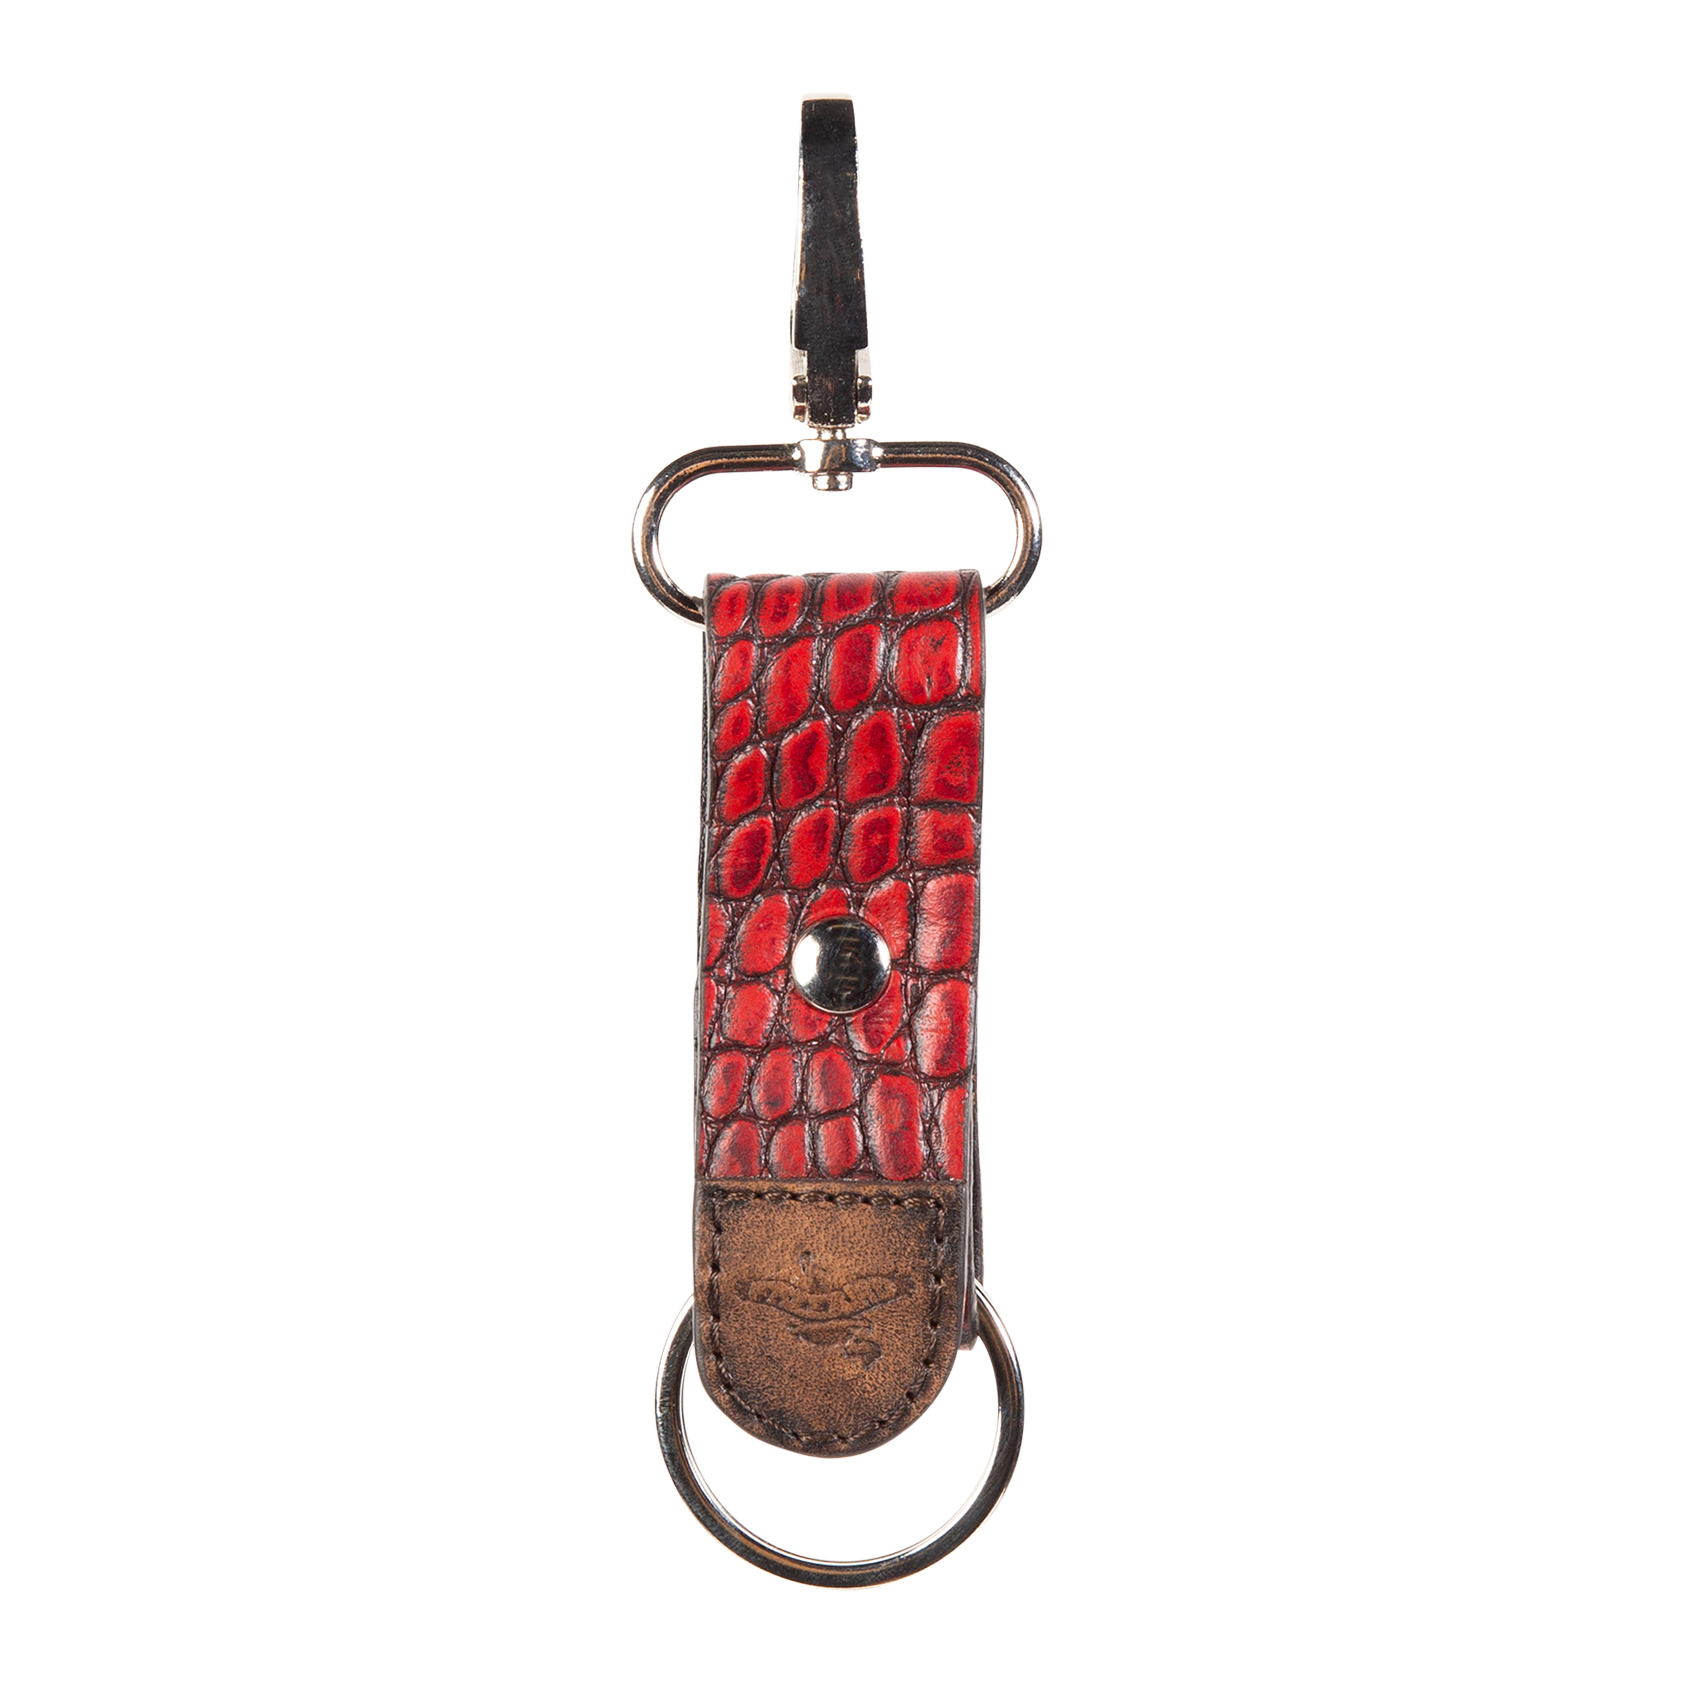 FREEBIRD Keychain red croco featuring silver hardware 